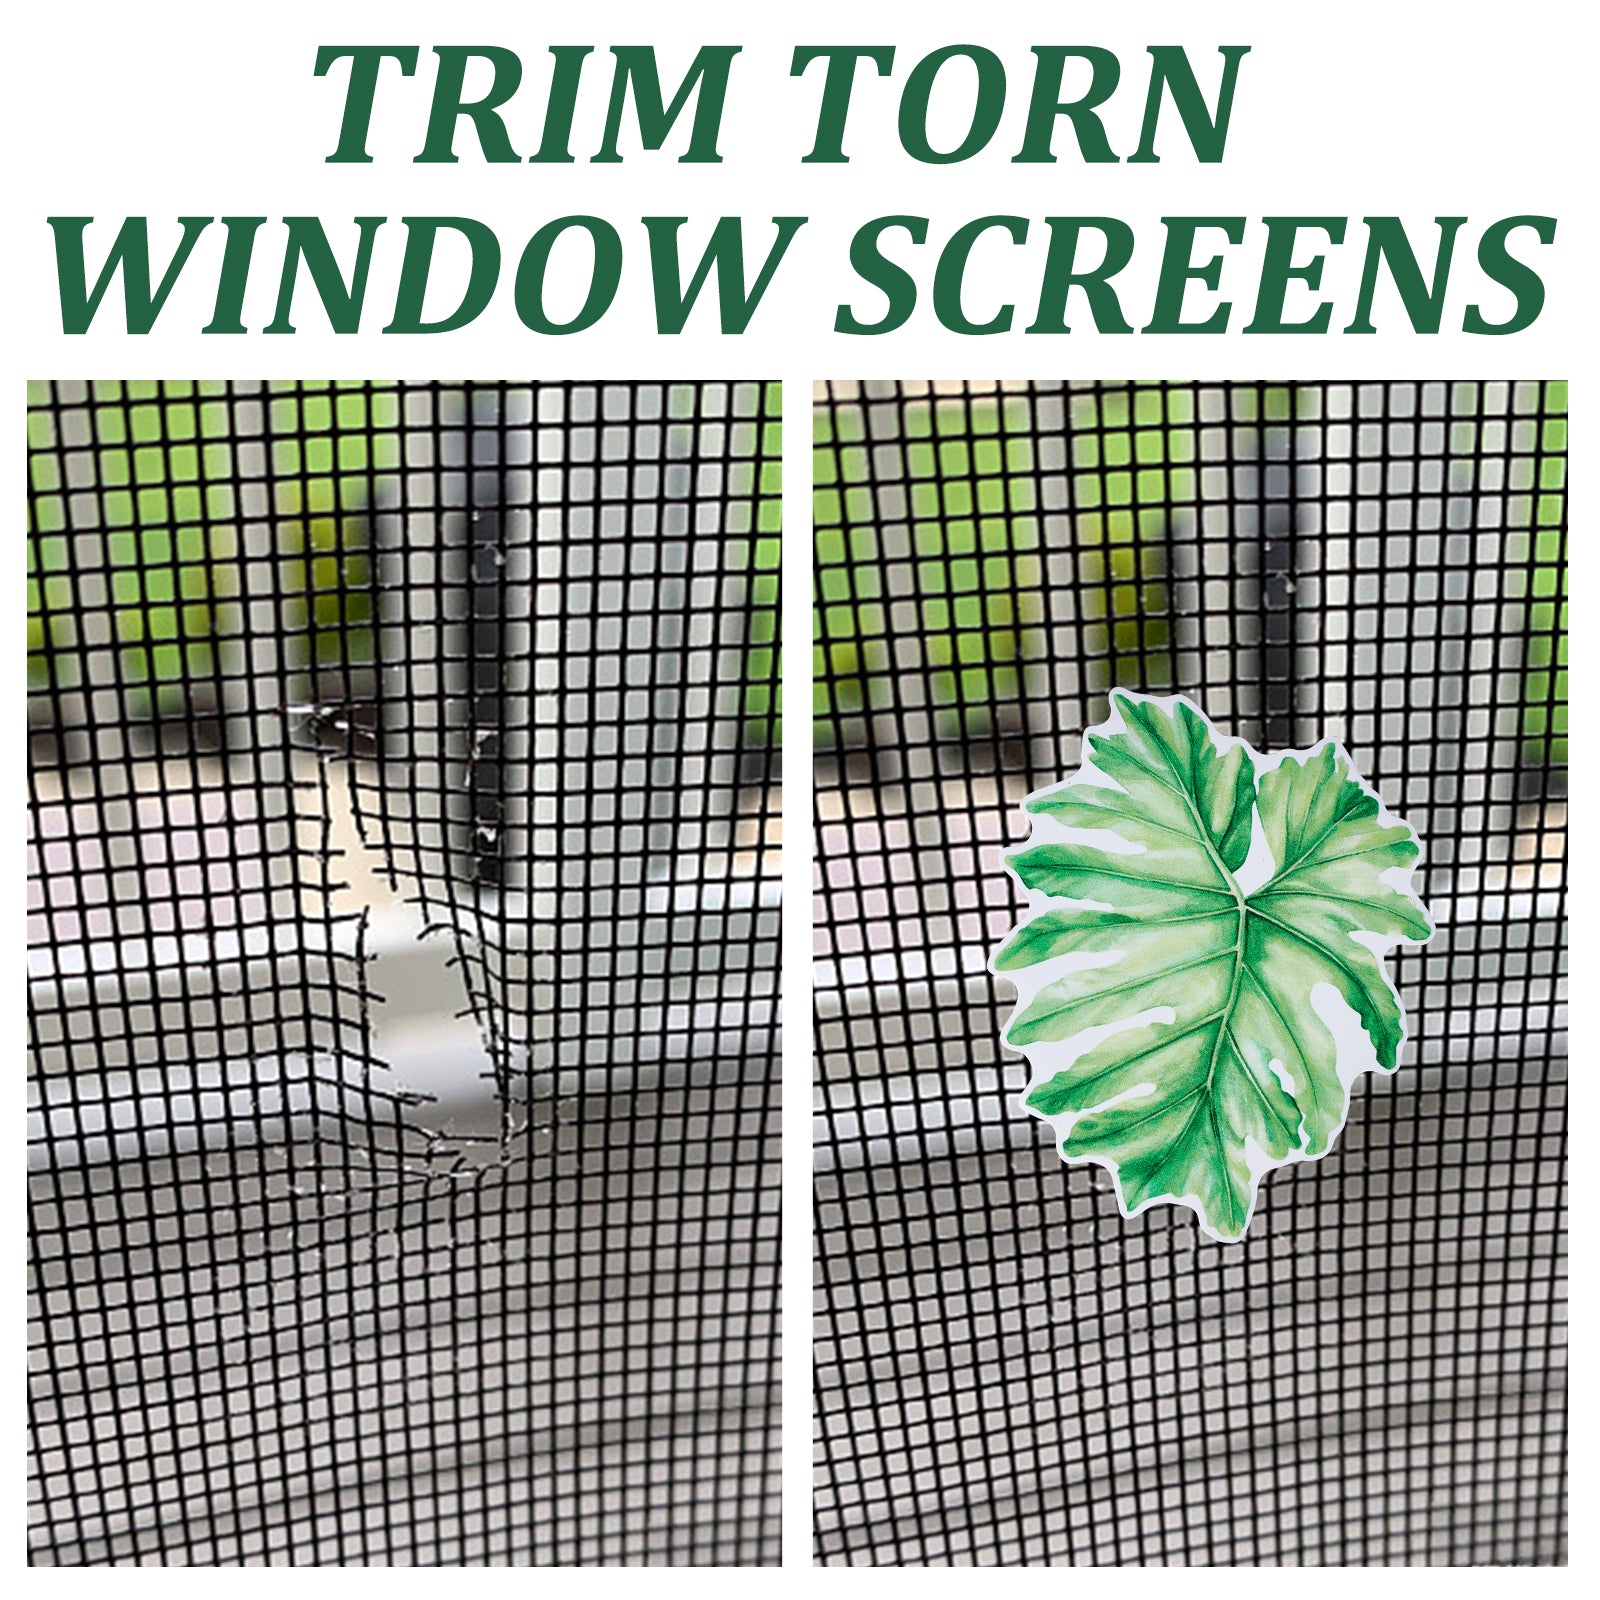 Globleland Waterproof PVC Anti-collision Window Stickers, Glass Door Protection Window Stickers, Mixed Leaf Patterns, Lime Green, 9~14x6.8~14.2x0.05cm, 12pcs/set